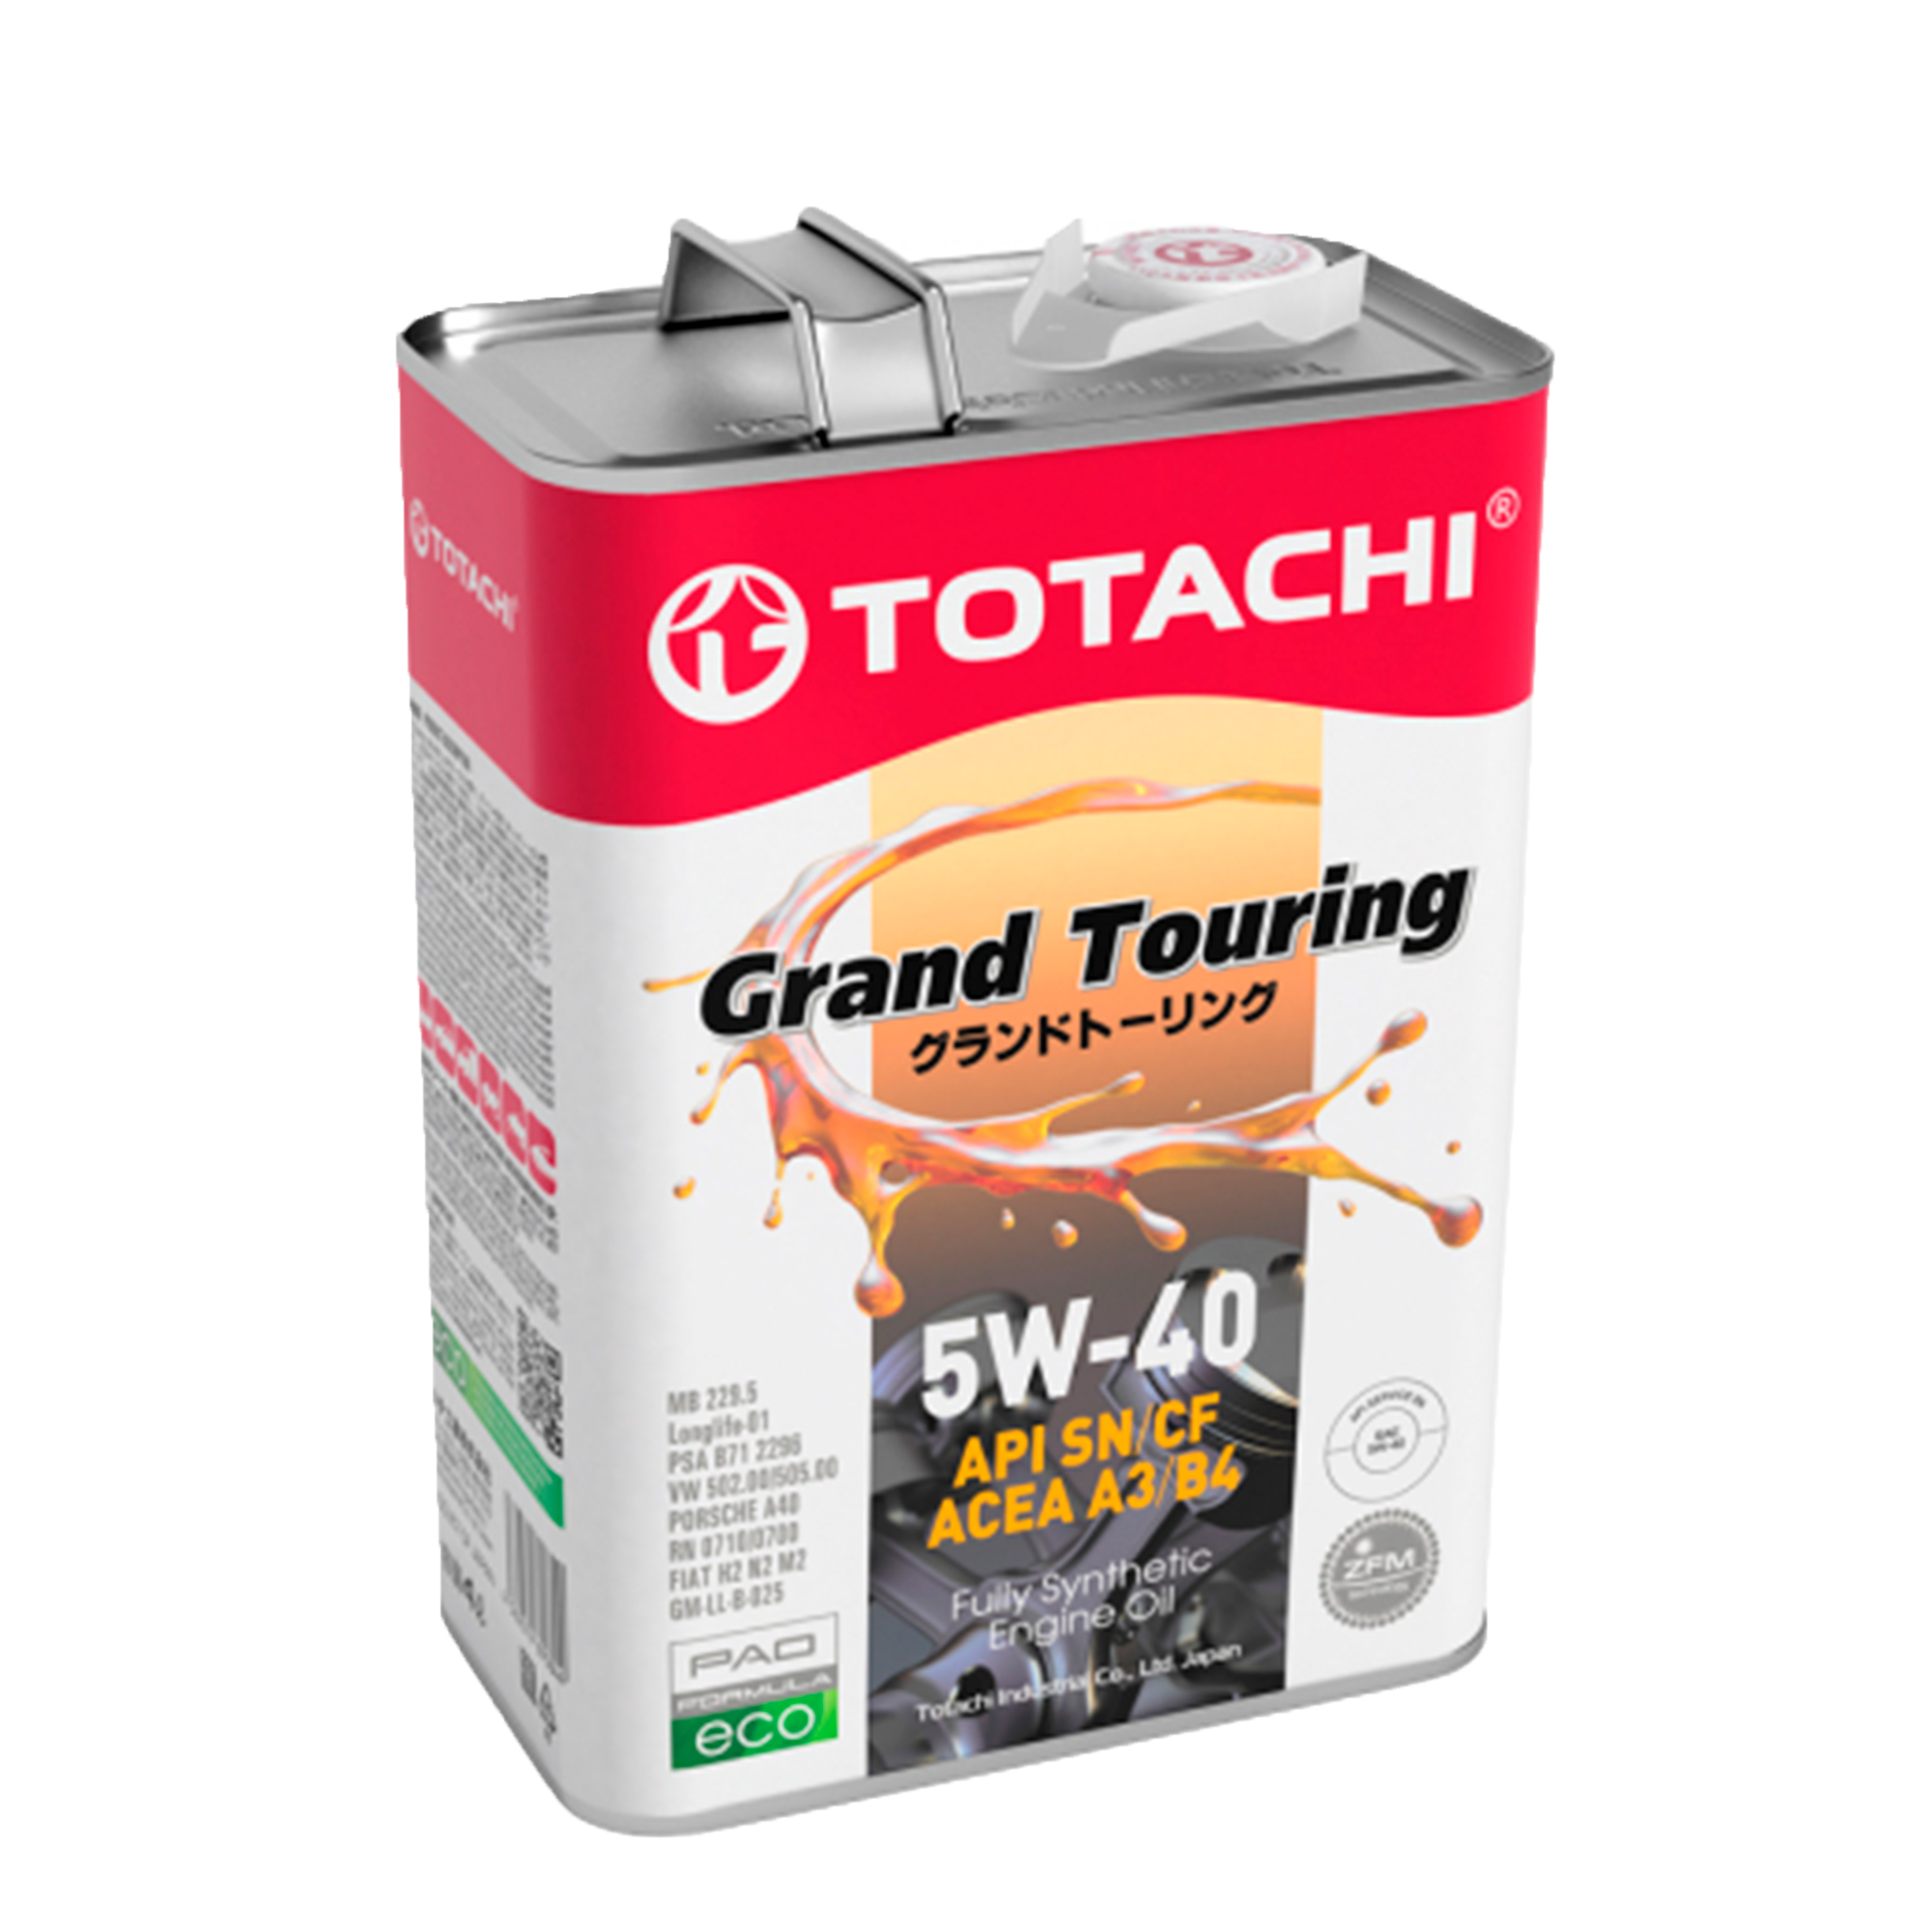 TOTACHI Grand Touring 5w40. TOTACHI Hyper ECODRIVE fully Synthetic SP/gf-6a 5w-30. Моторное масло Тотачи 5w40. TOTACHI 5w30 синтетика. Grand touring 5w 40